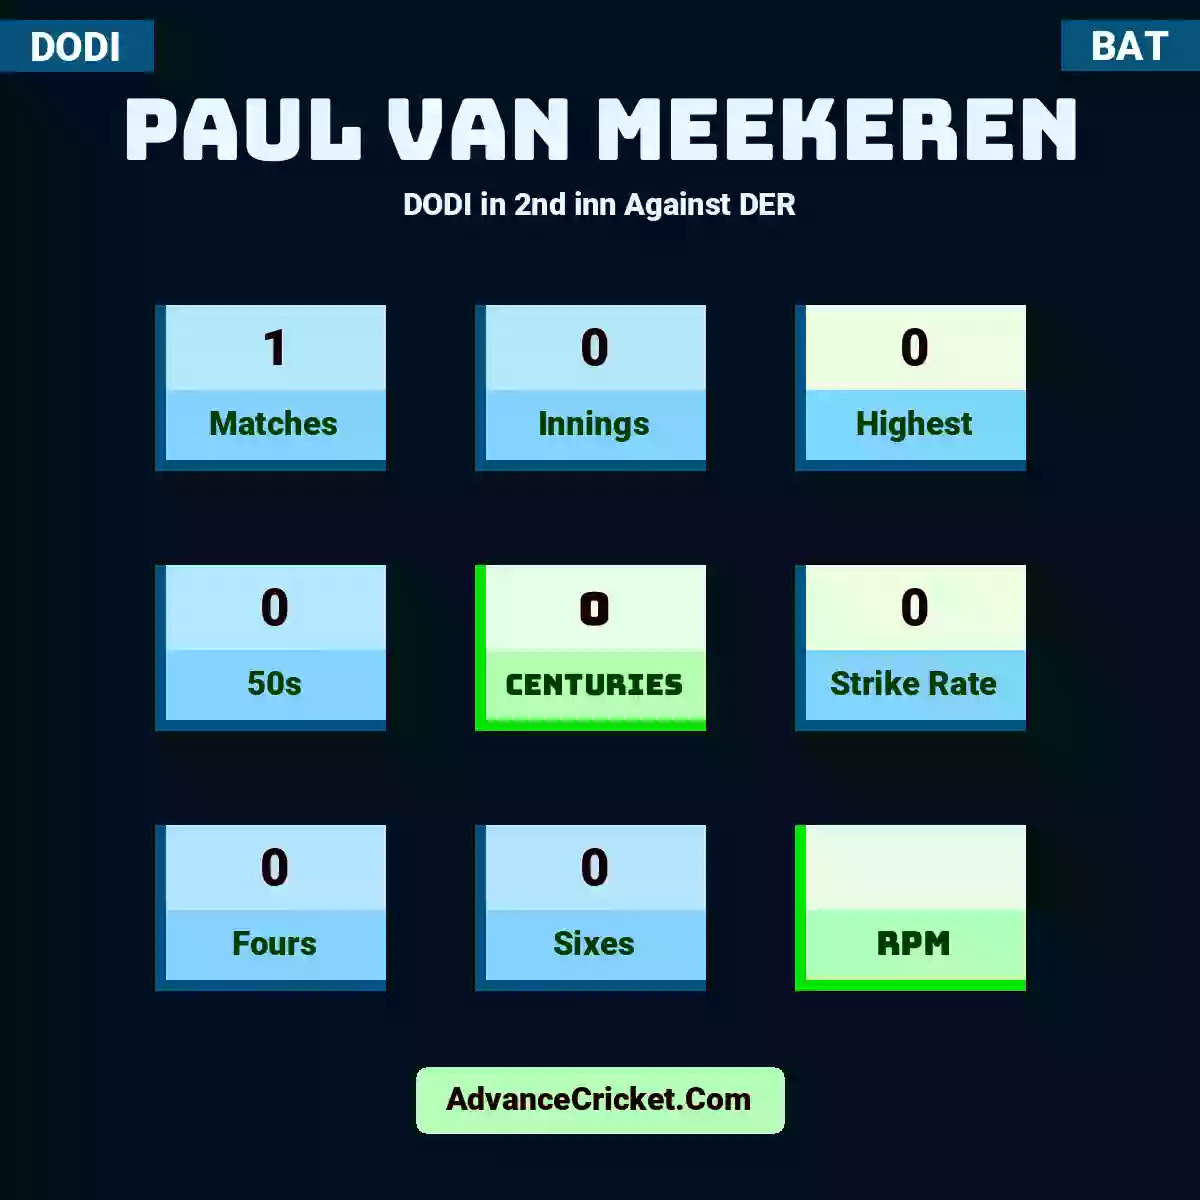 Paul van Meekeren DODI  in 2nd inn Against DER, Paul van Meekeren played 1 matches, scored 0 runs as highest, 0 half-centuries, and 0 centuries, with a strike rate of 0. P.Meekeren hit 0 fours and 0 sixes.